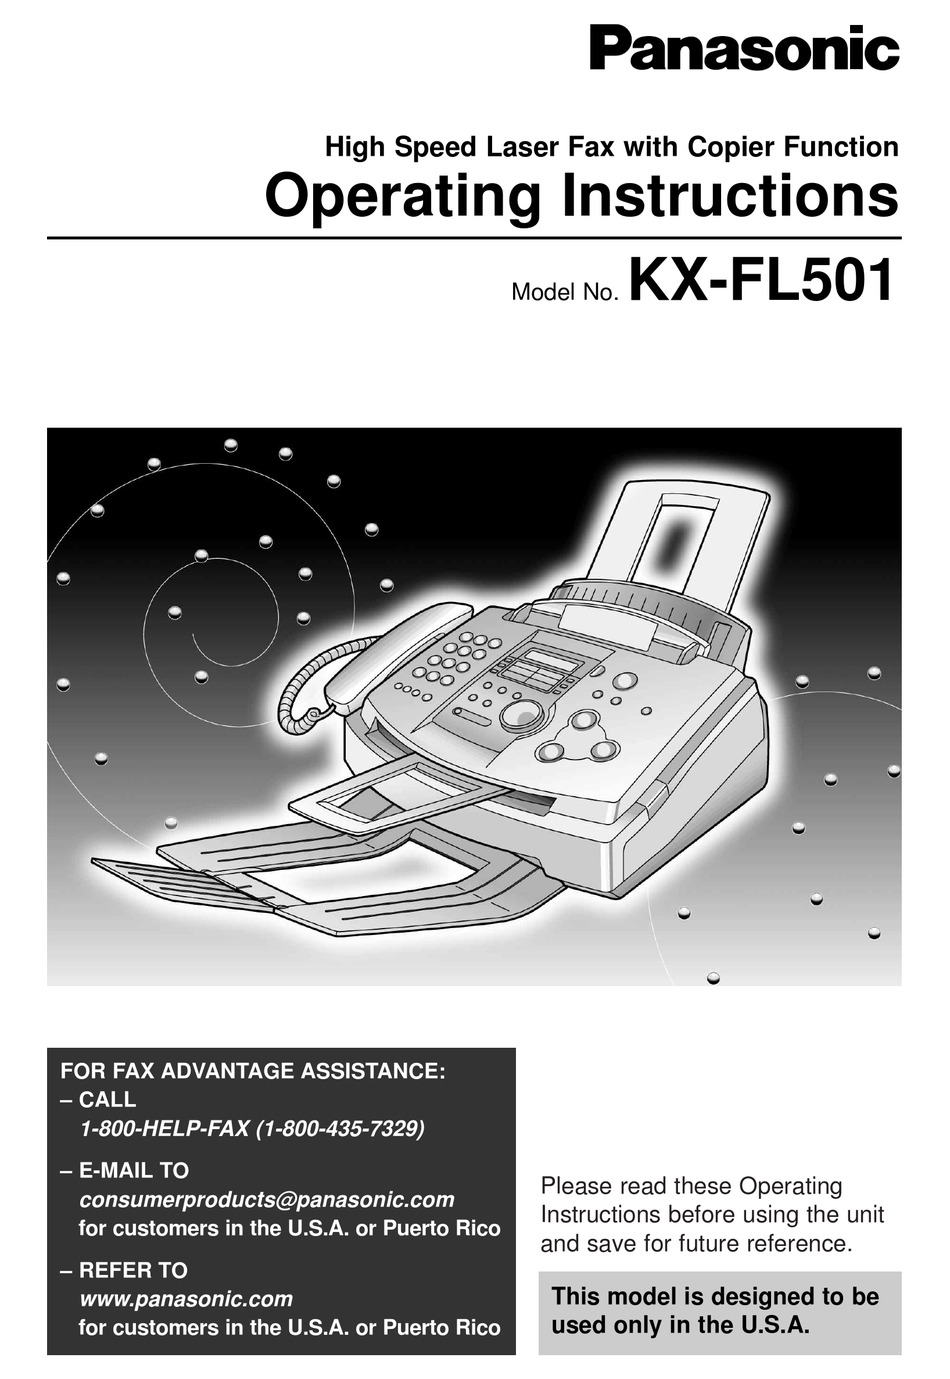 PANASONIC KX-FL501 OPERATING INSTRUCTIONS MANUAL Pdf Download 